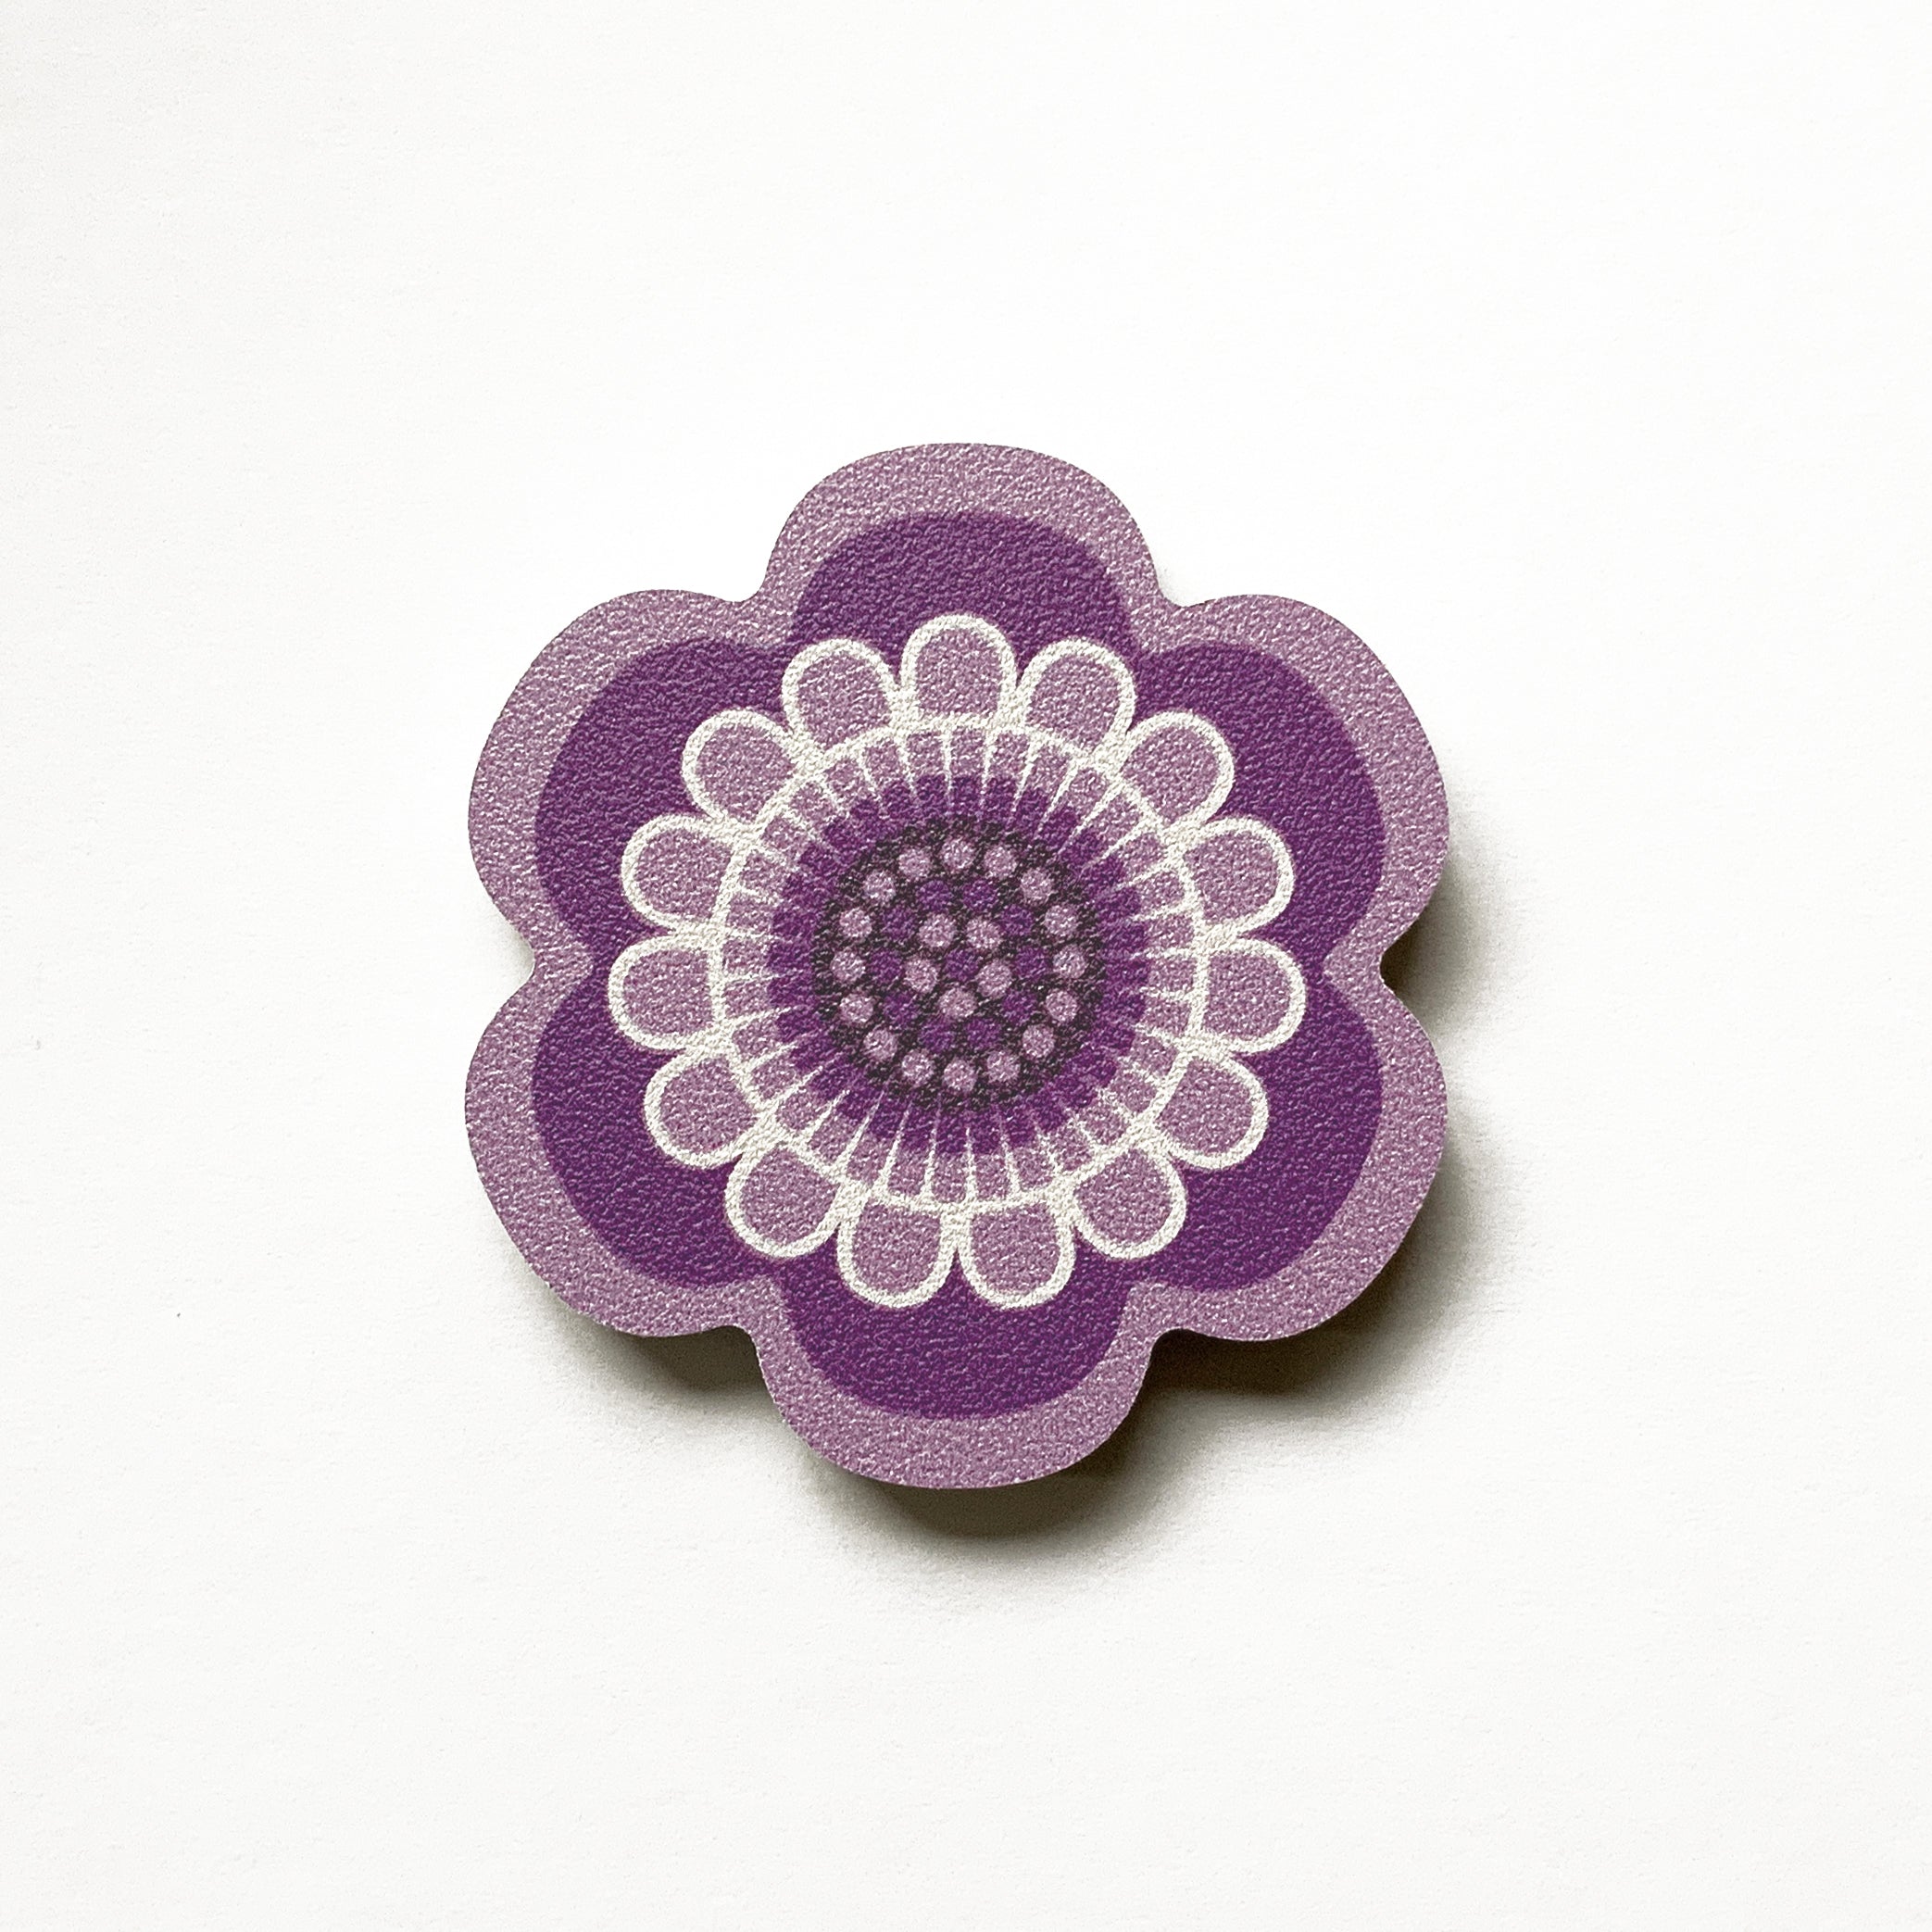 A purple flower shaped plywood fridge magnet by Beyond the Fridge